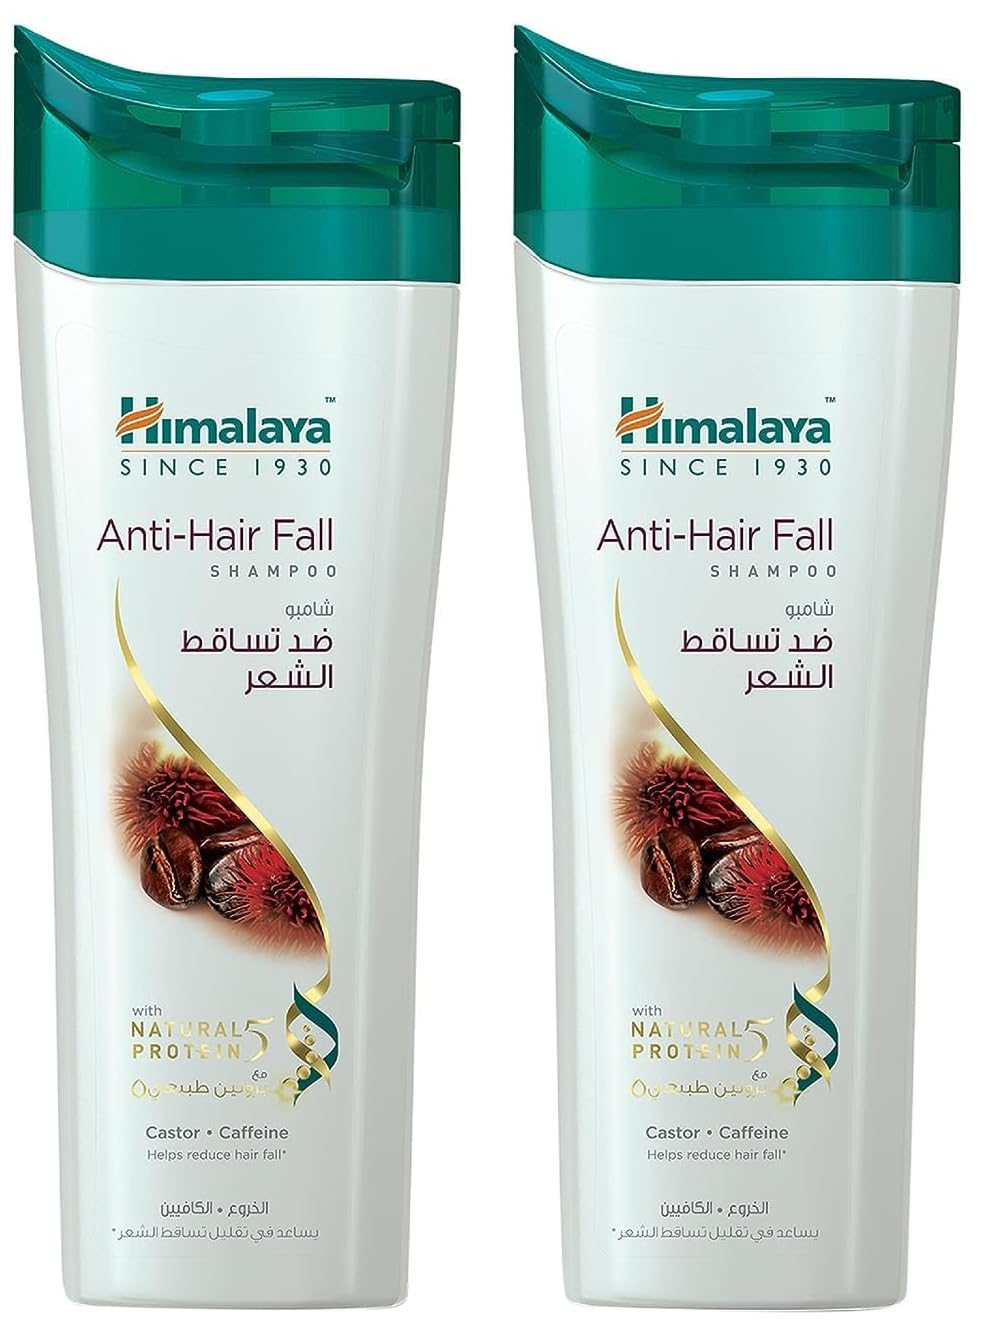 himalaya anti hair fall szampon opinie